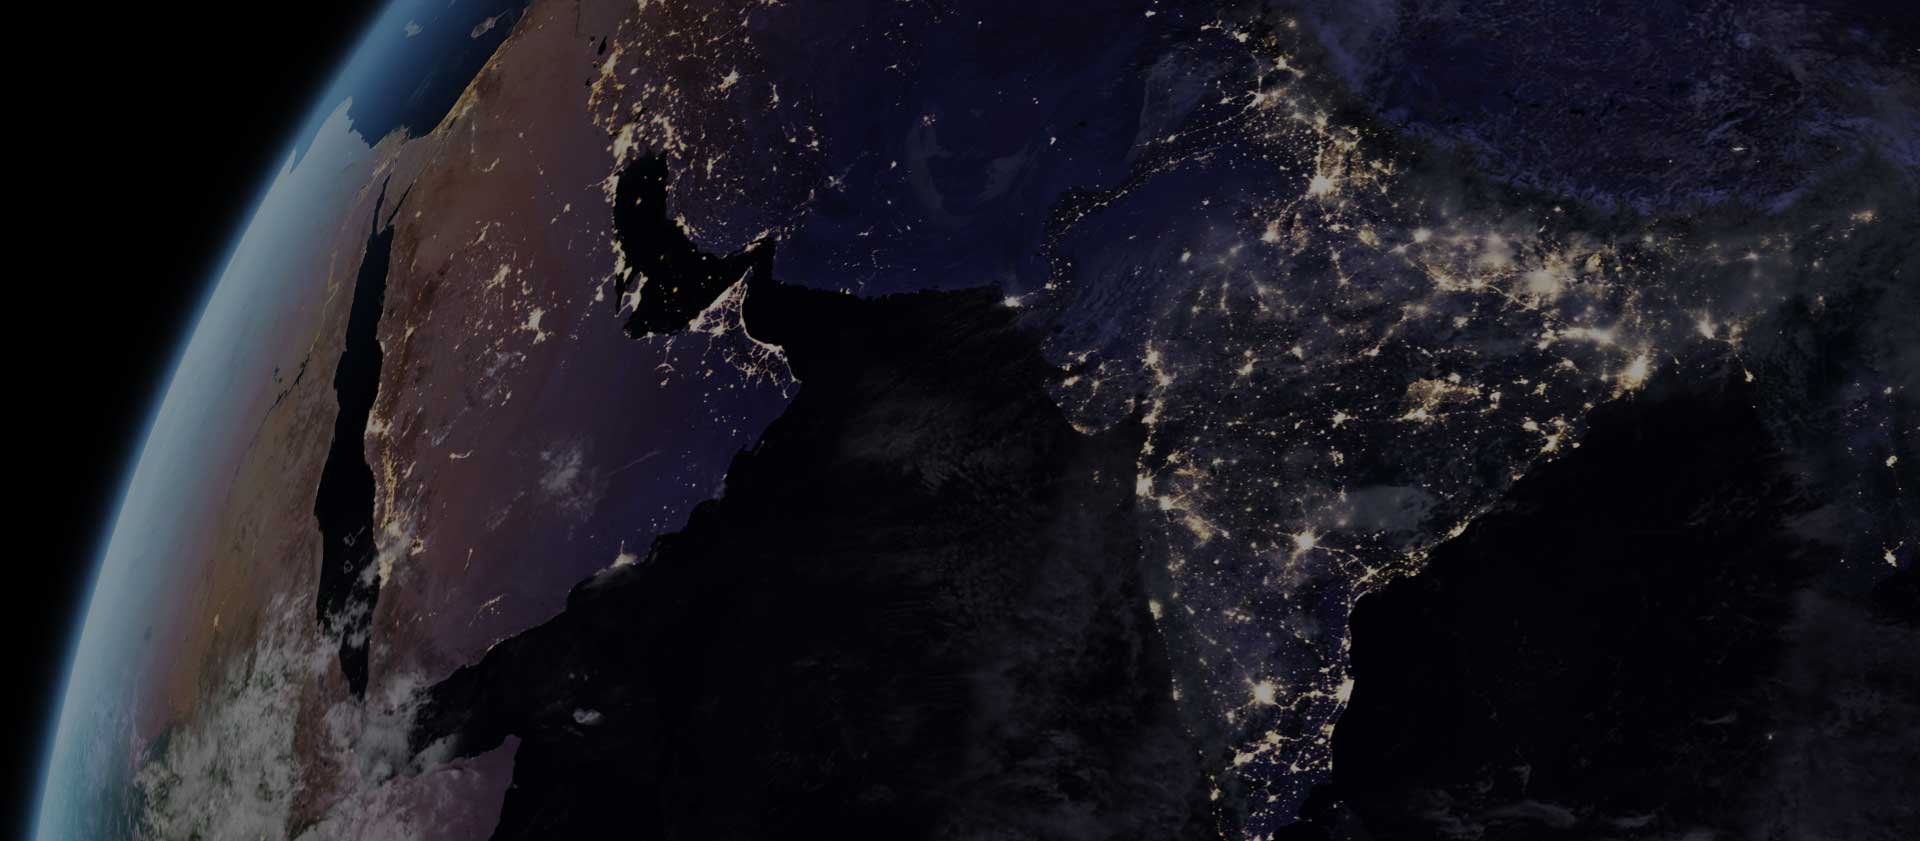 Aerial image taken from space showing Indian peninsula at night